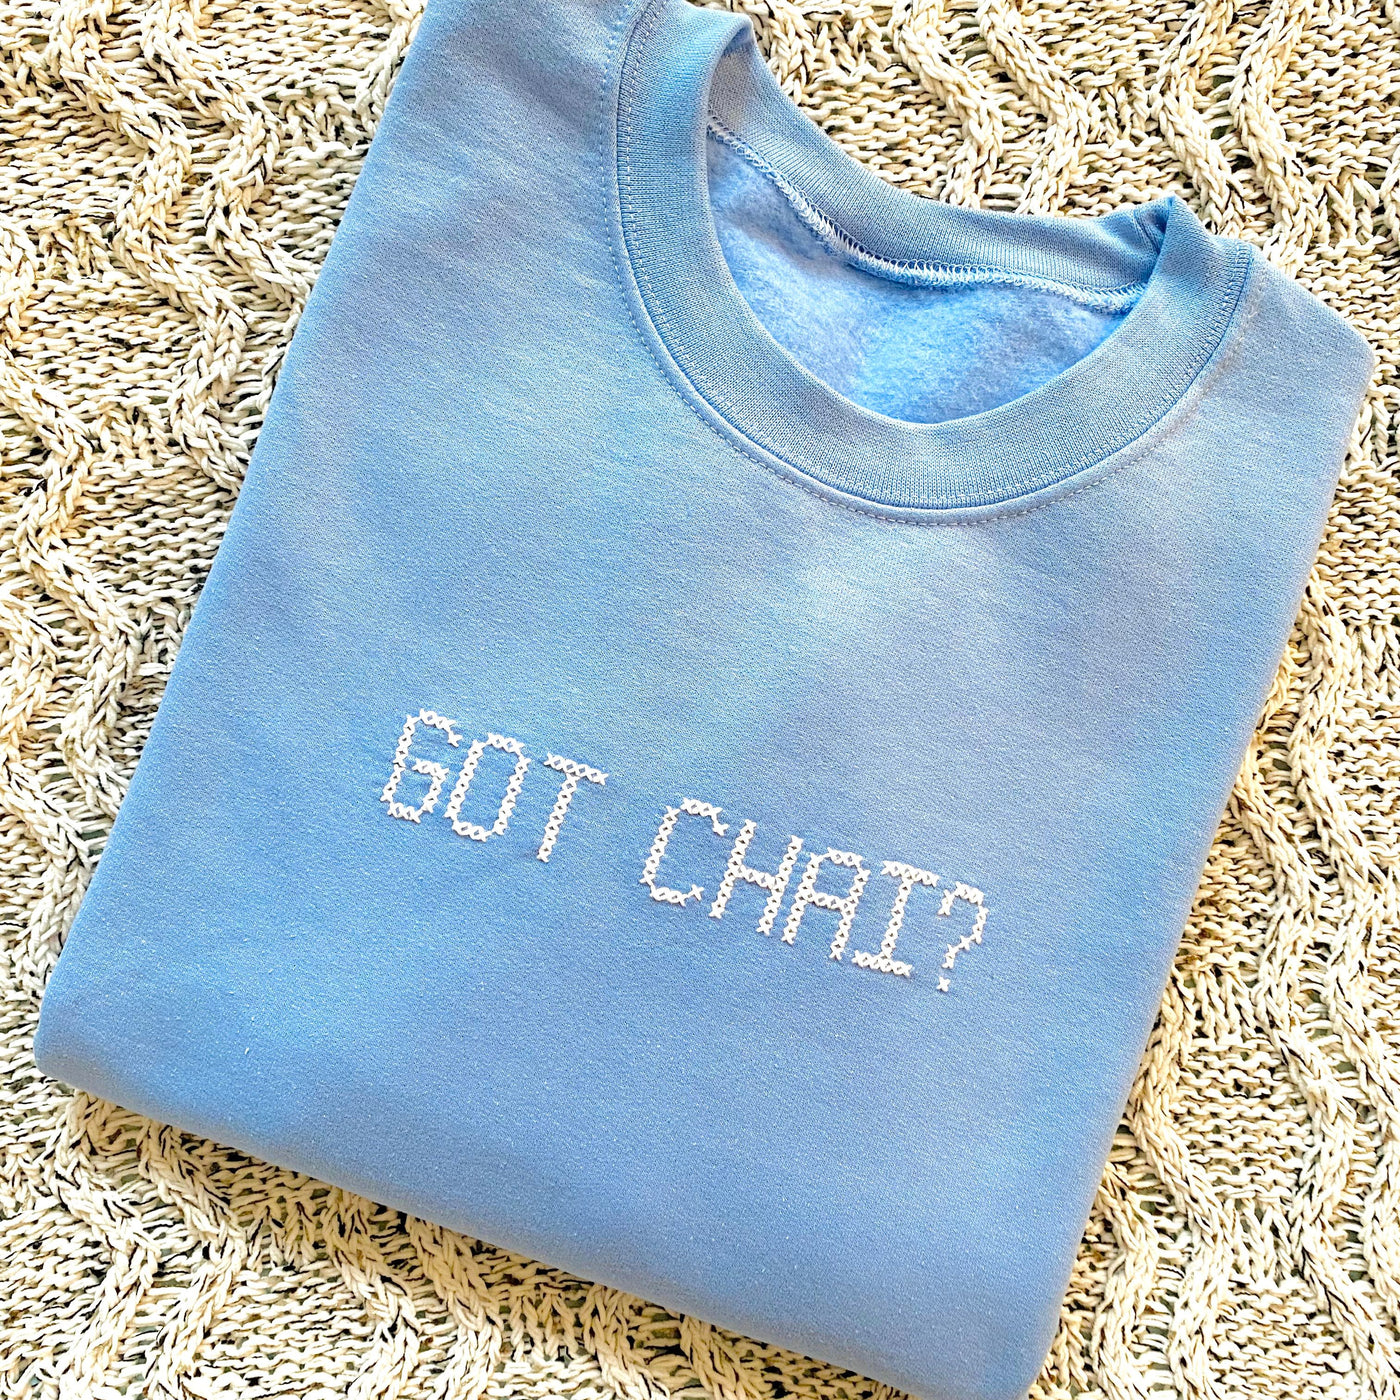 Got Chai? Crewneck/Sweatshirt (100% of Proceeds Donated) - New Design